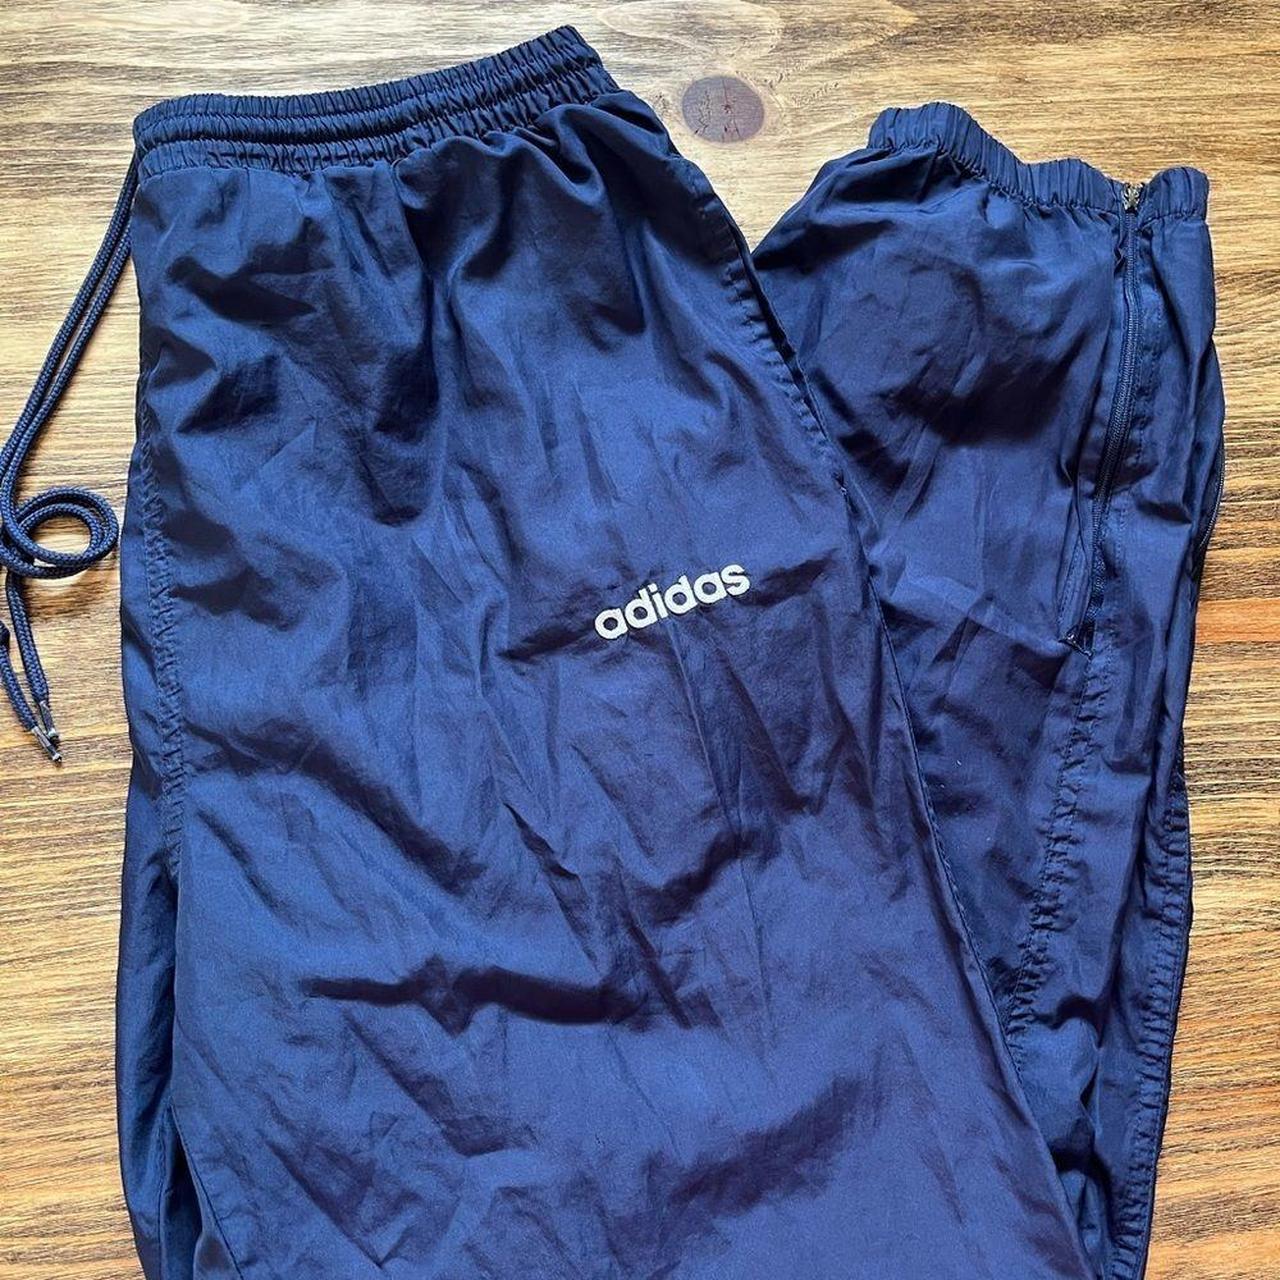 Product Image 3 - Item: Adidas Vintage Sweatpants
Size: Medium